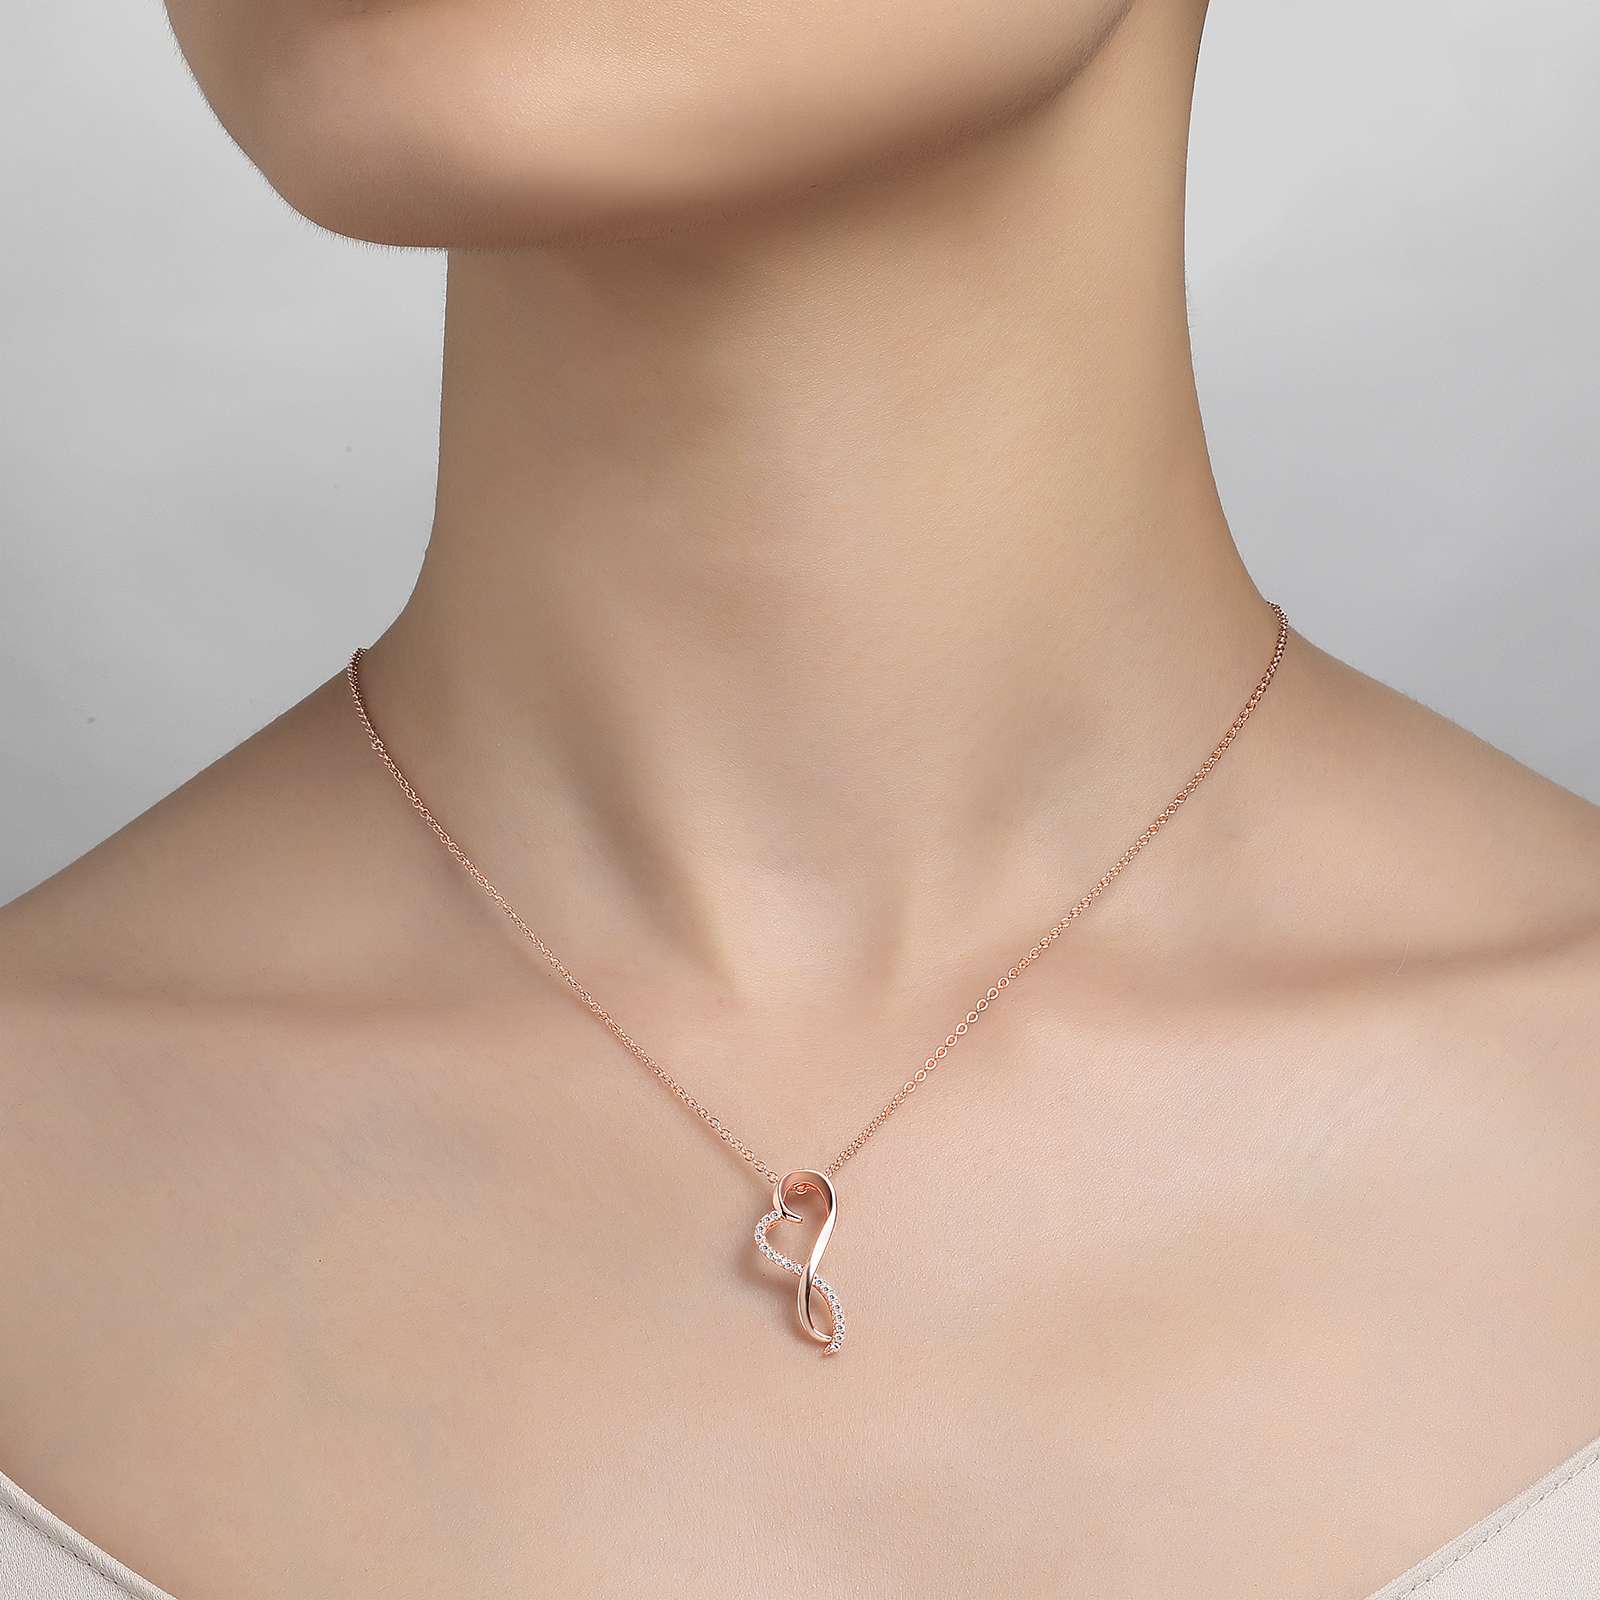 Lafonn Simulated Diamond Infinity Heart Necklace P0151CLR